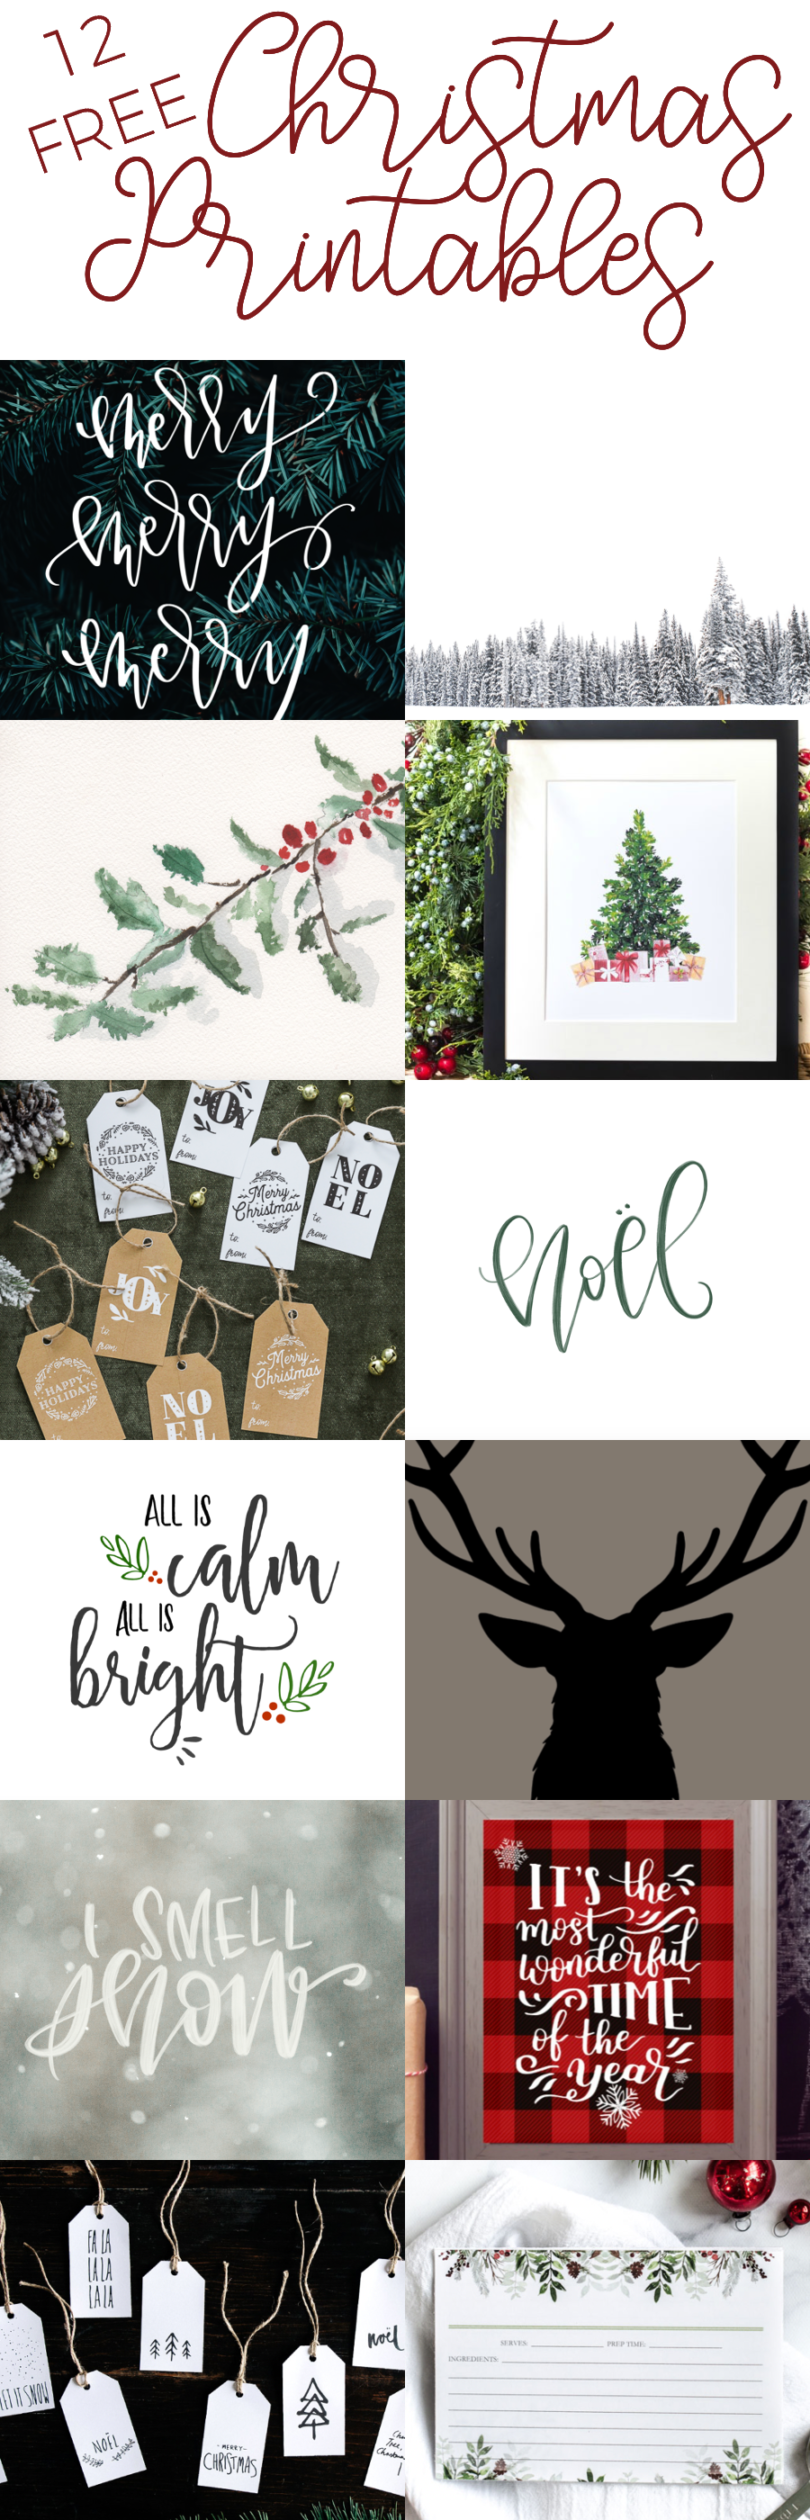 12 Free Christmas Printables on Michelle Amanda Wilson